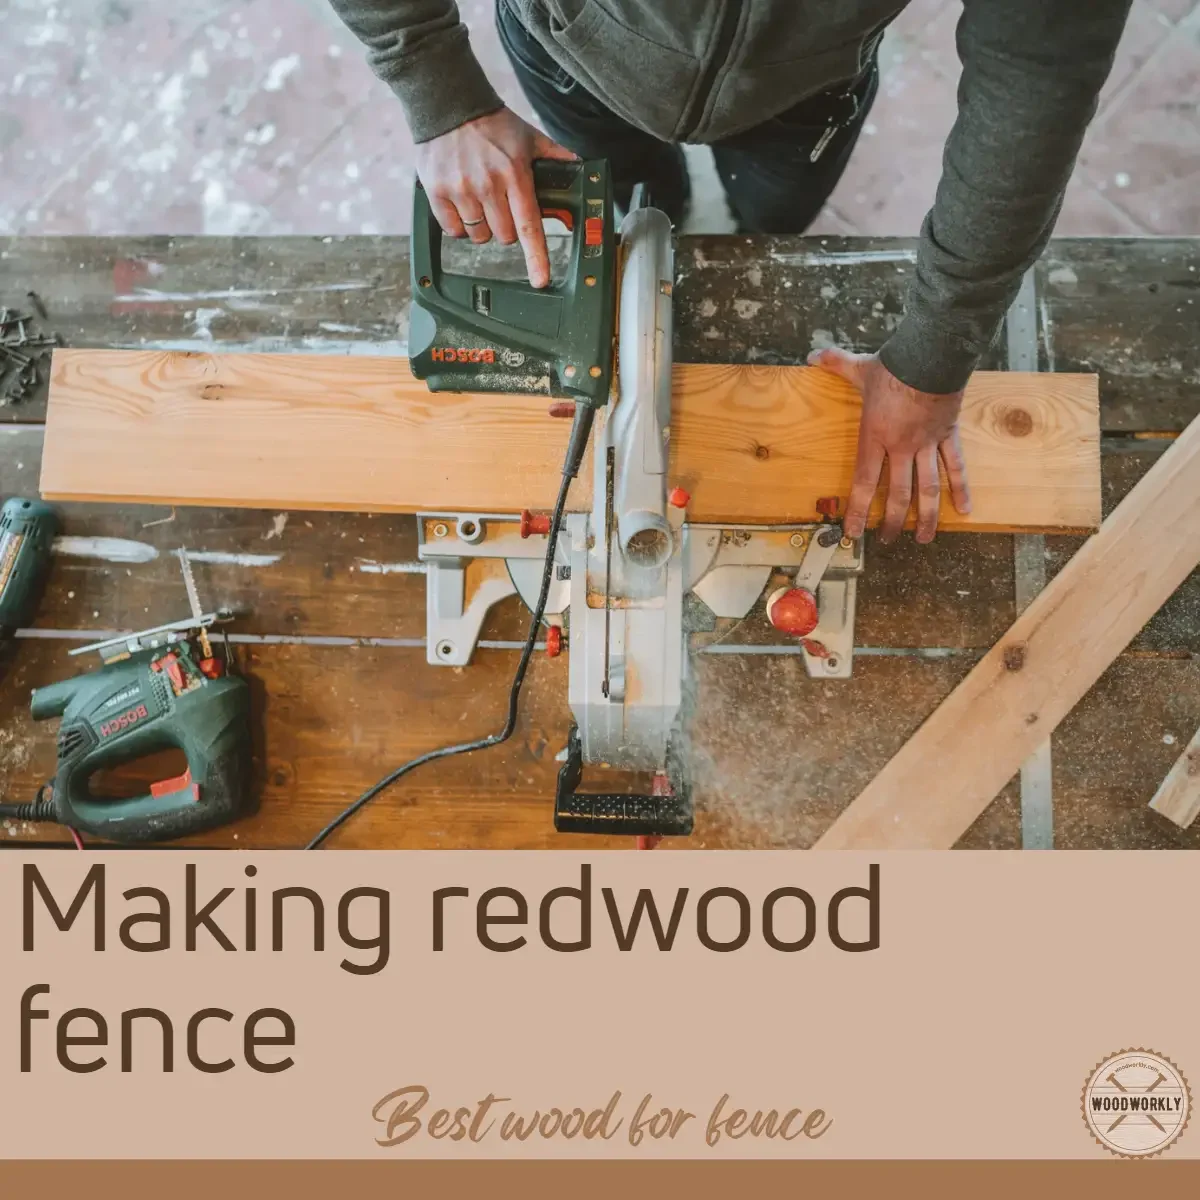 Making redwood fence